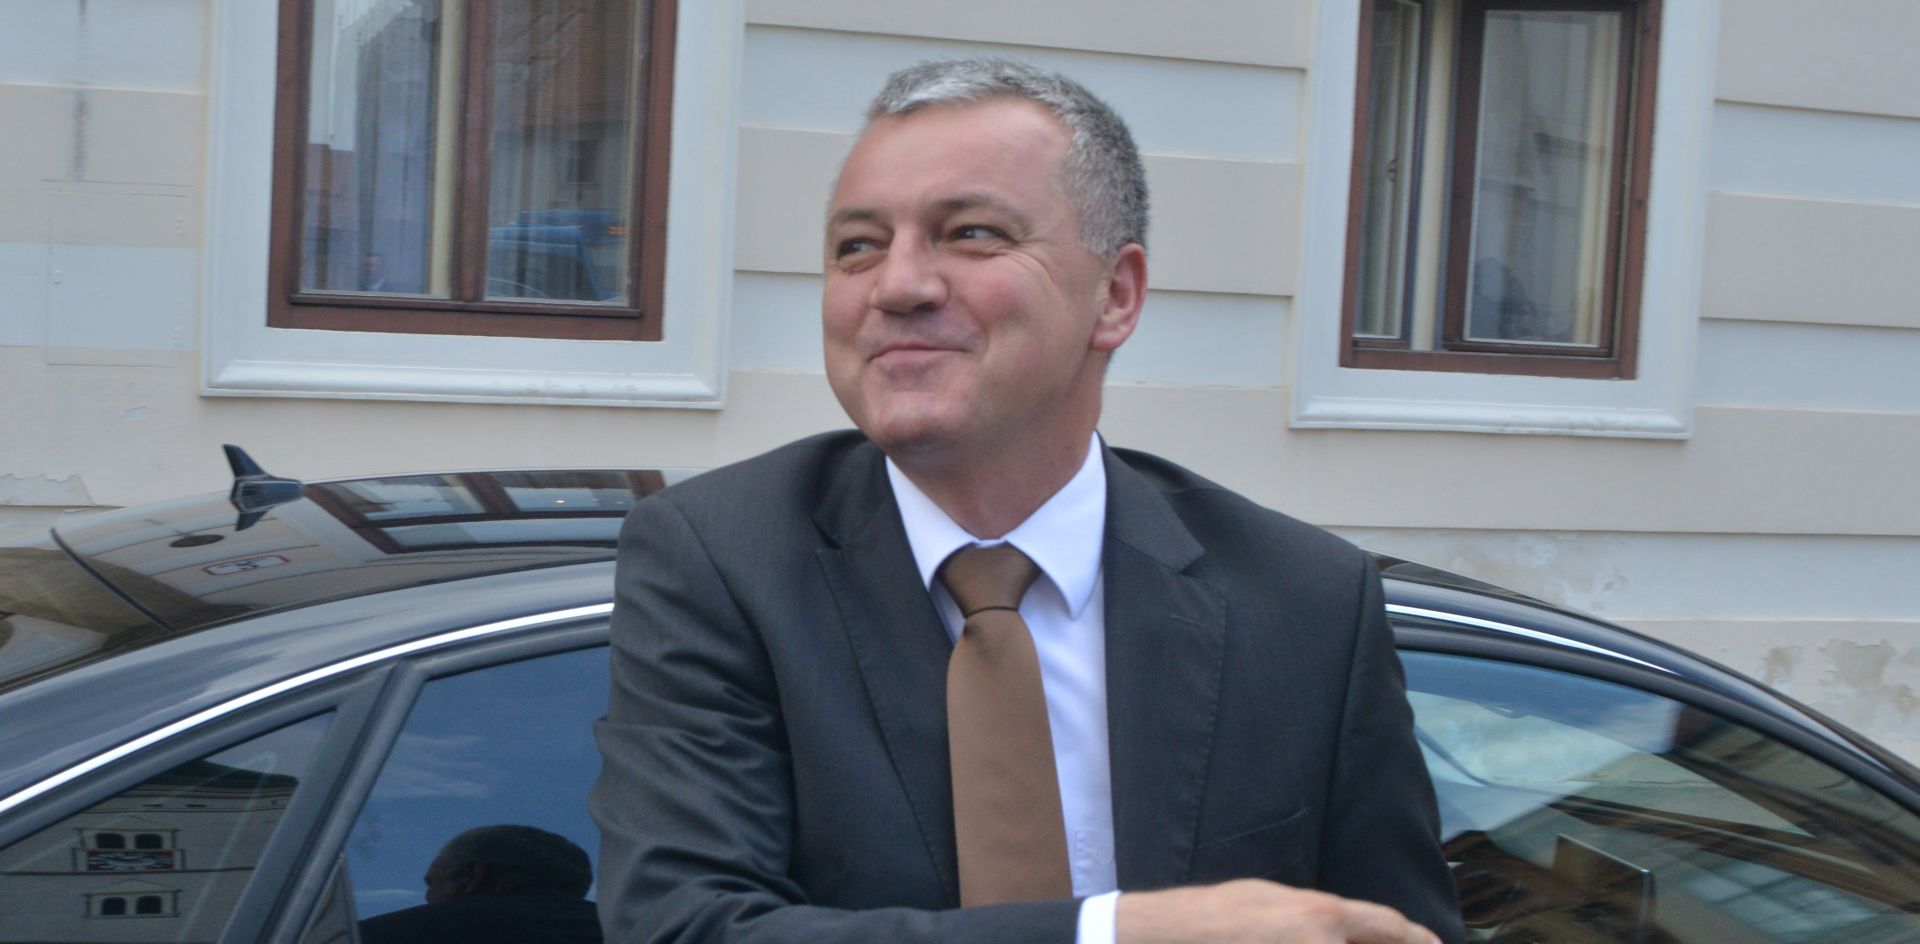 Zagreb, 05.06.2018 - Dolazak ministara u zgradu Vlade. Na fotografiji Darko Horvat.
foto HINA/ Admir BULJUBAIÆ/ abu